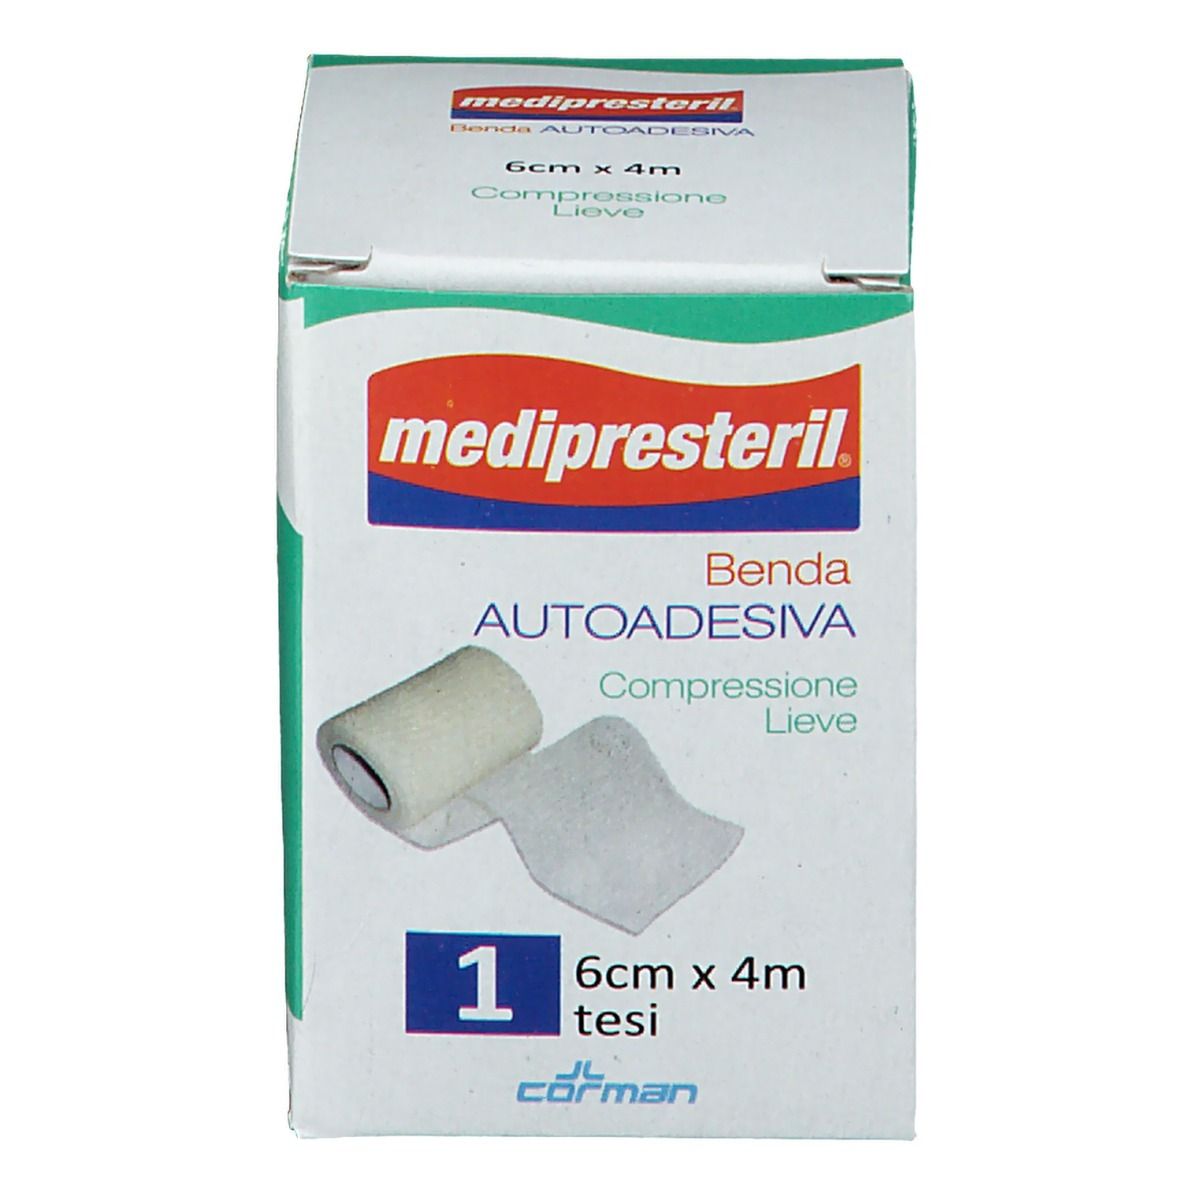 MediPresteril® Benda Autoadesiva Compressione Lieve 6 x 4 m